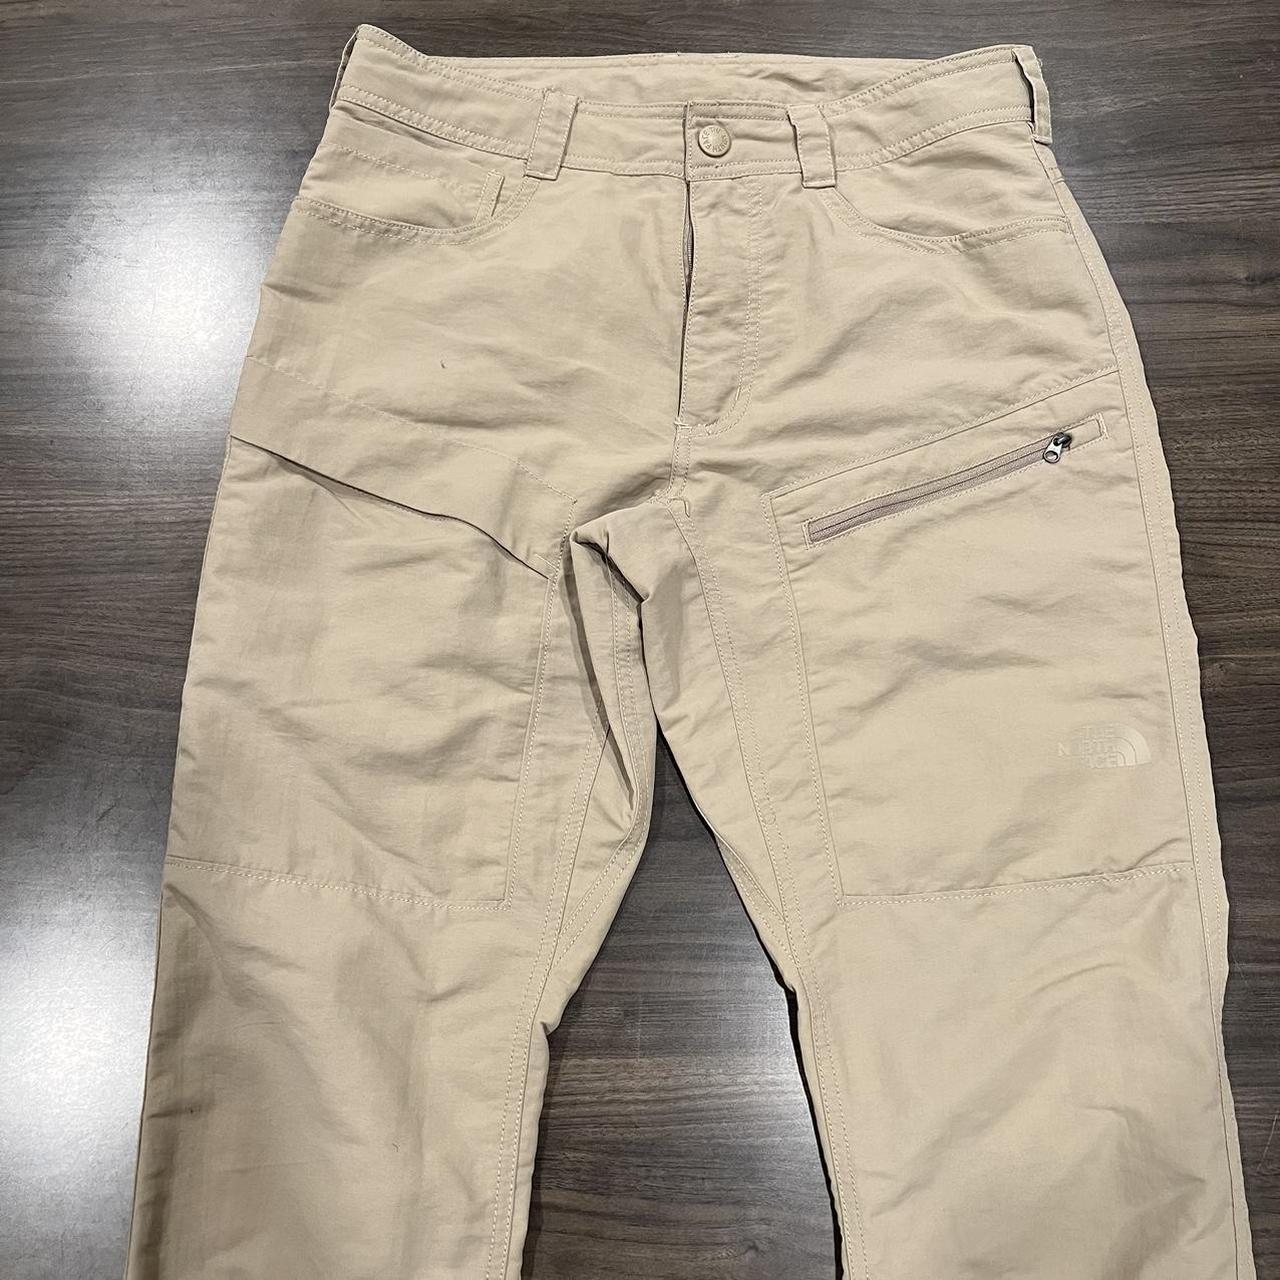 Carhartt Convertible Pants Shorts Cargo Men Hiking Mens